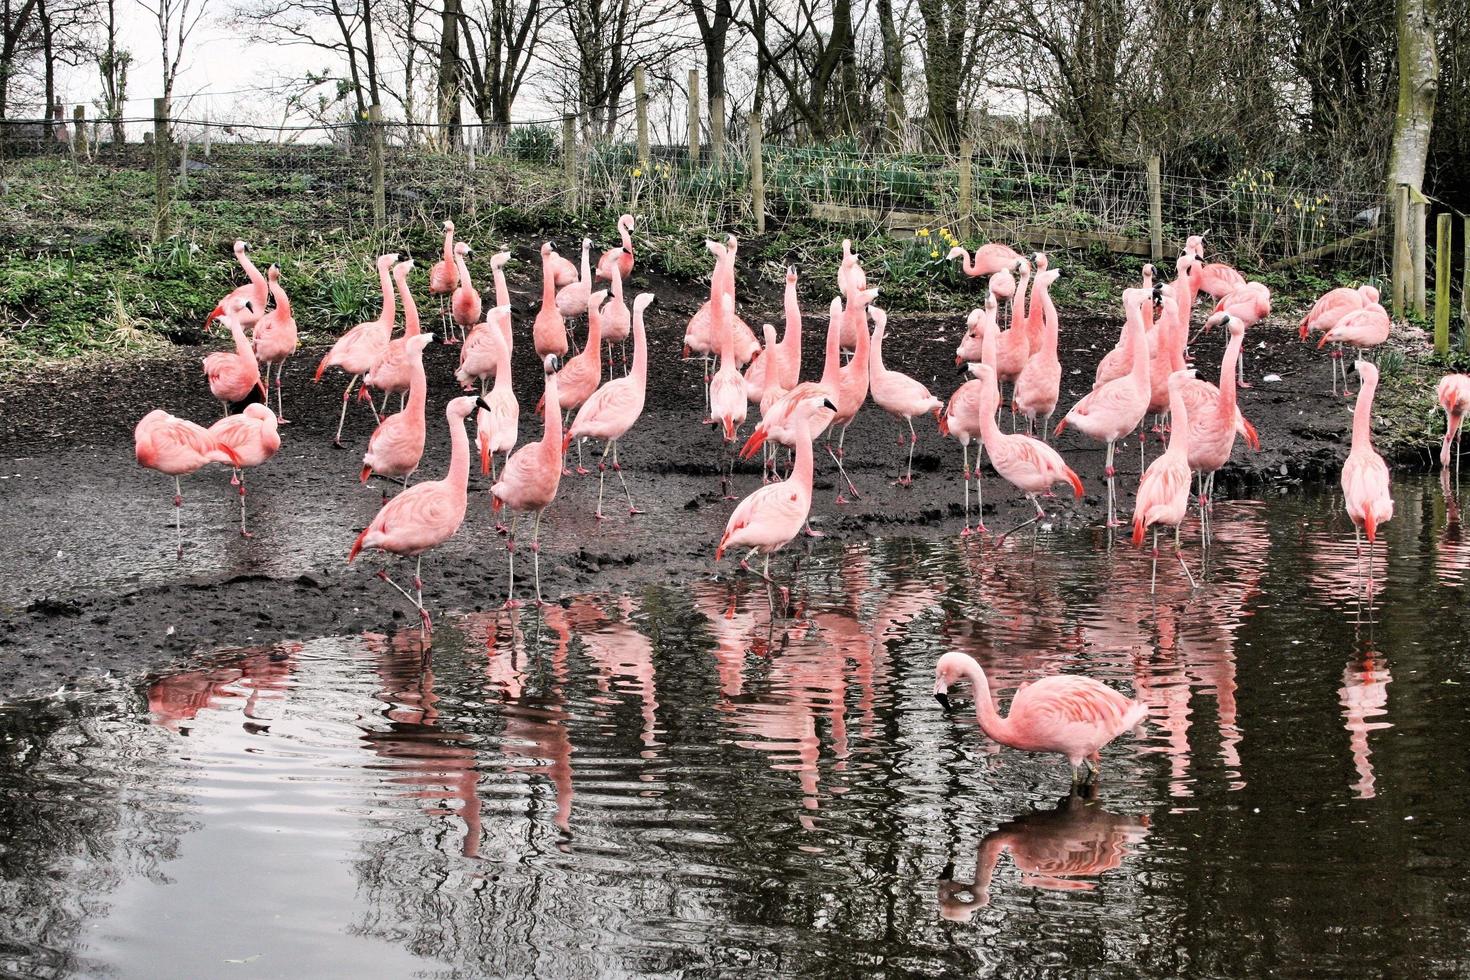 A view of a Flamingo photo